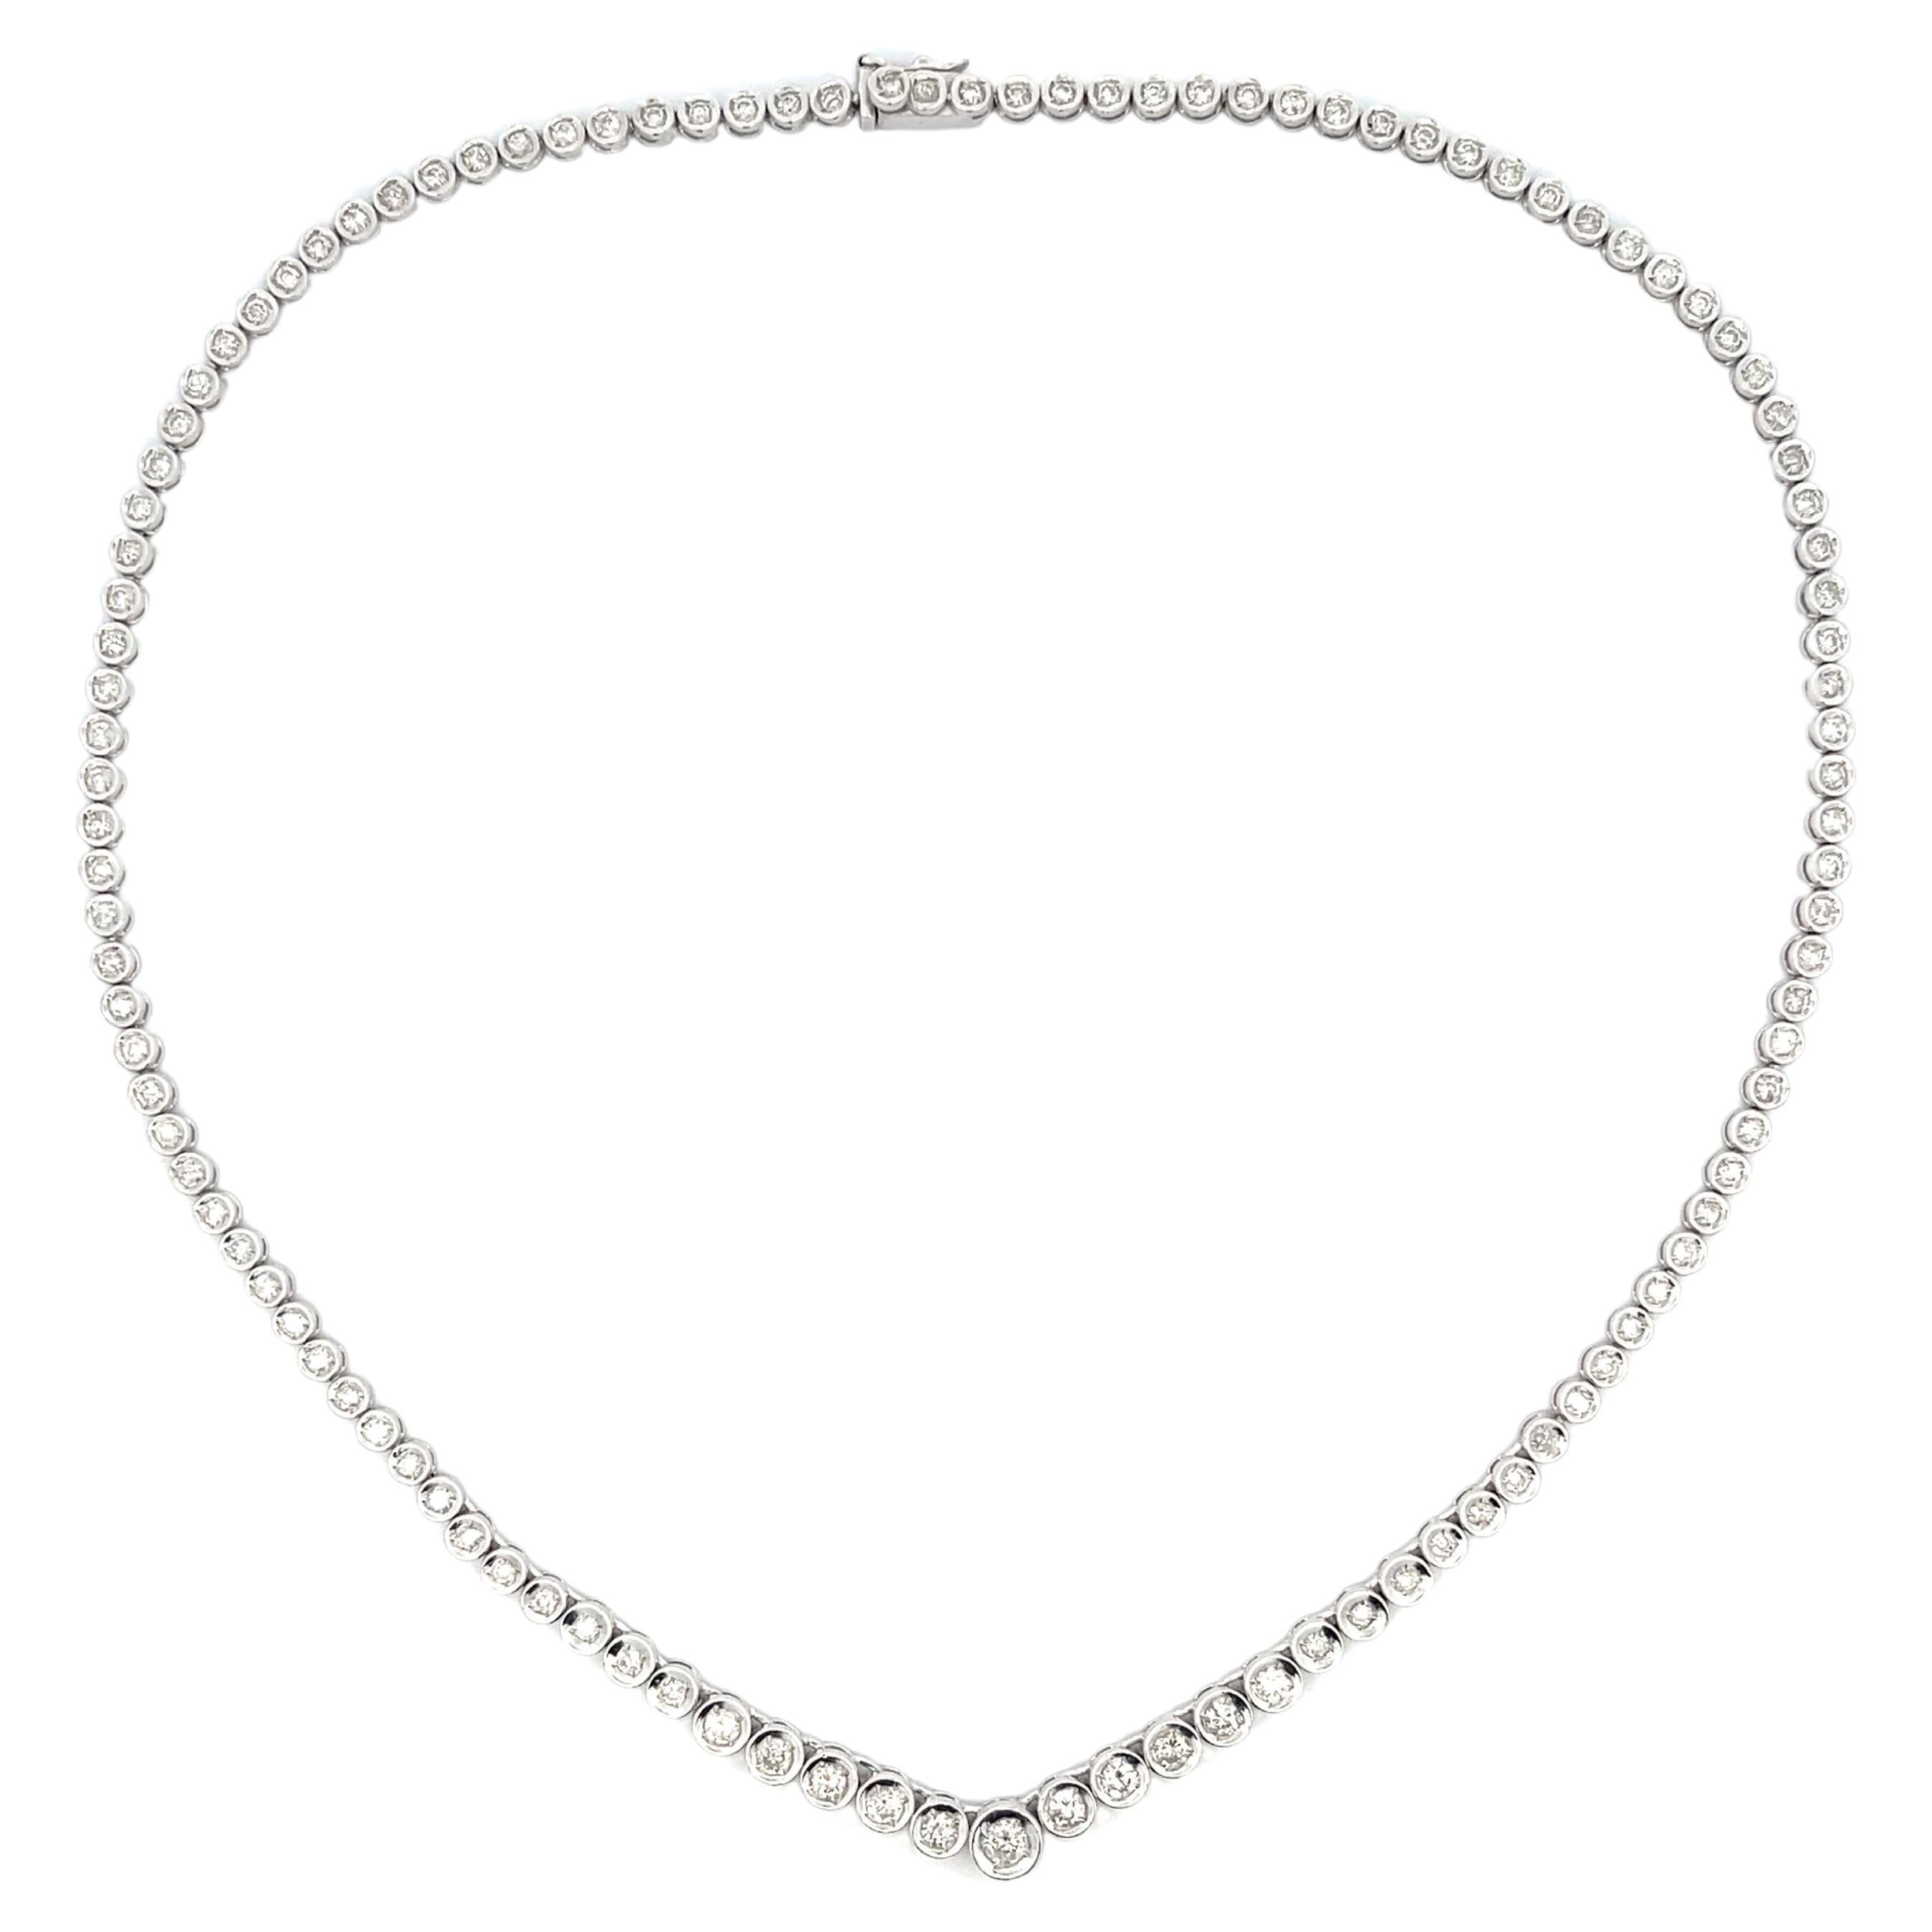 Eternity Diamond Necklace in Platinum